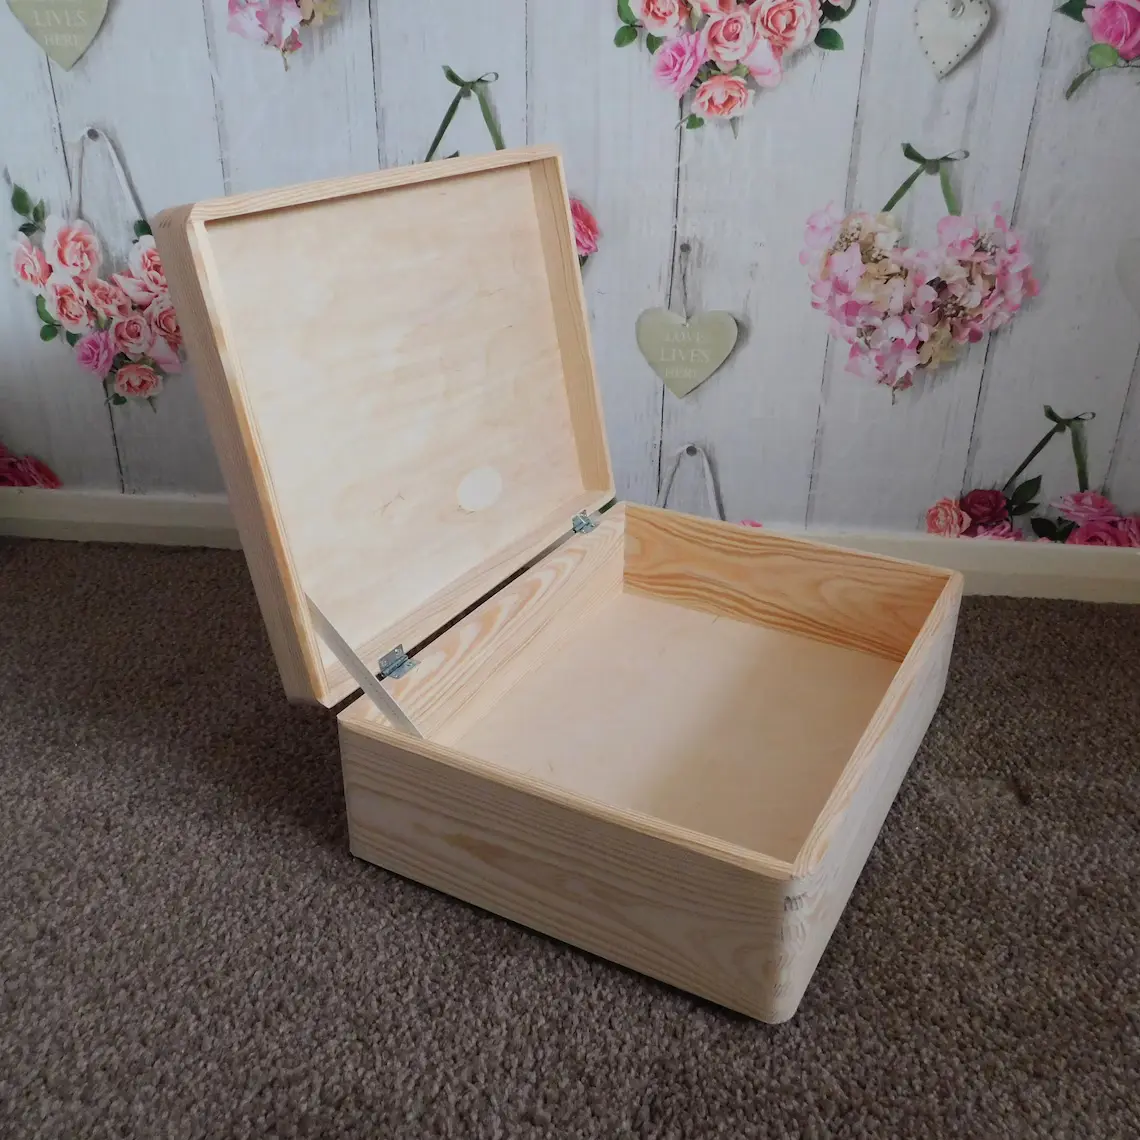 Natural Unpainted Wooden Box With Lid - L40cm x W30cm x H14cm - Without Handles - Inside